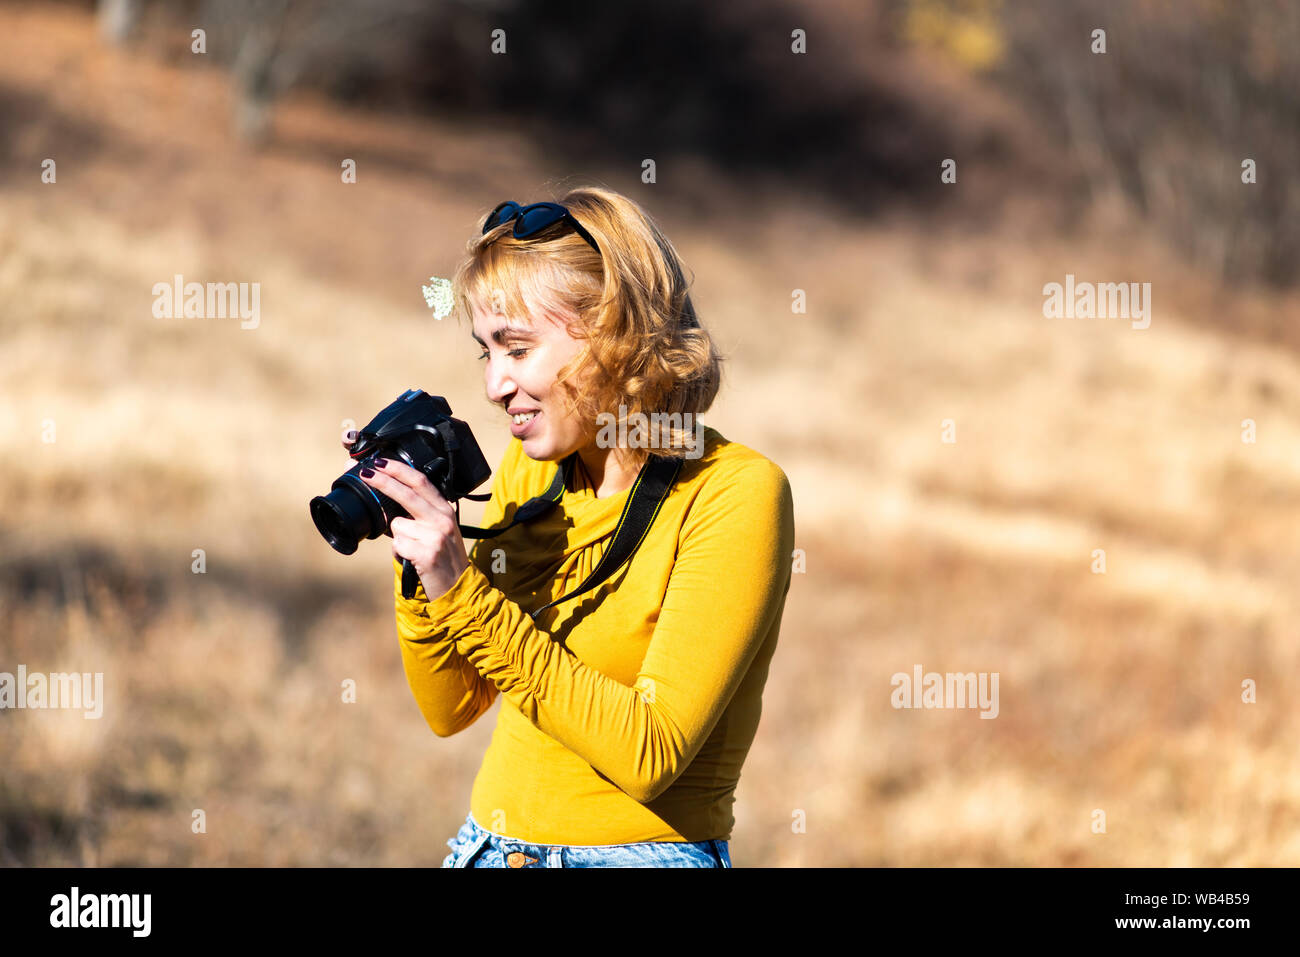 Female photographer capturing autumn scenery outdoors Stock Photo